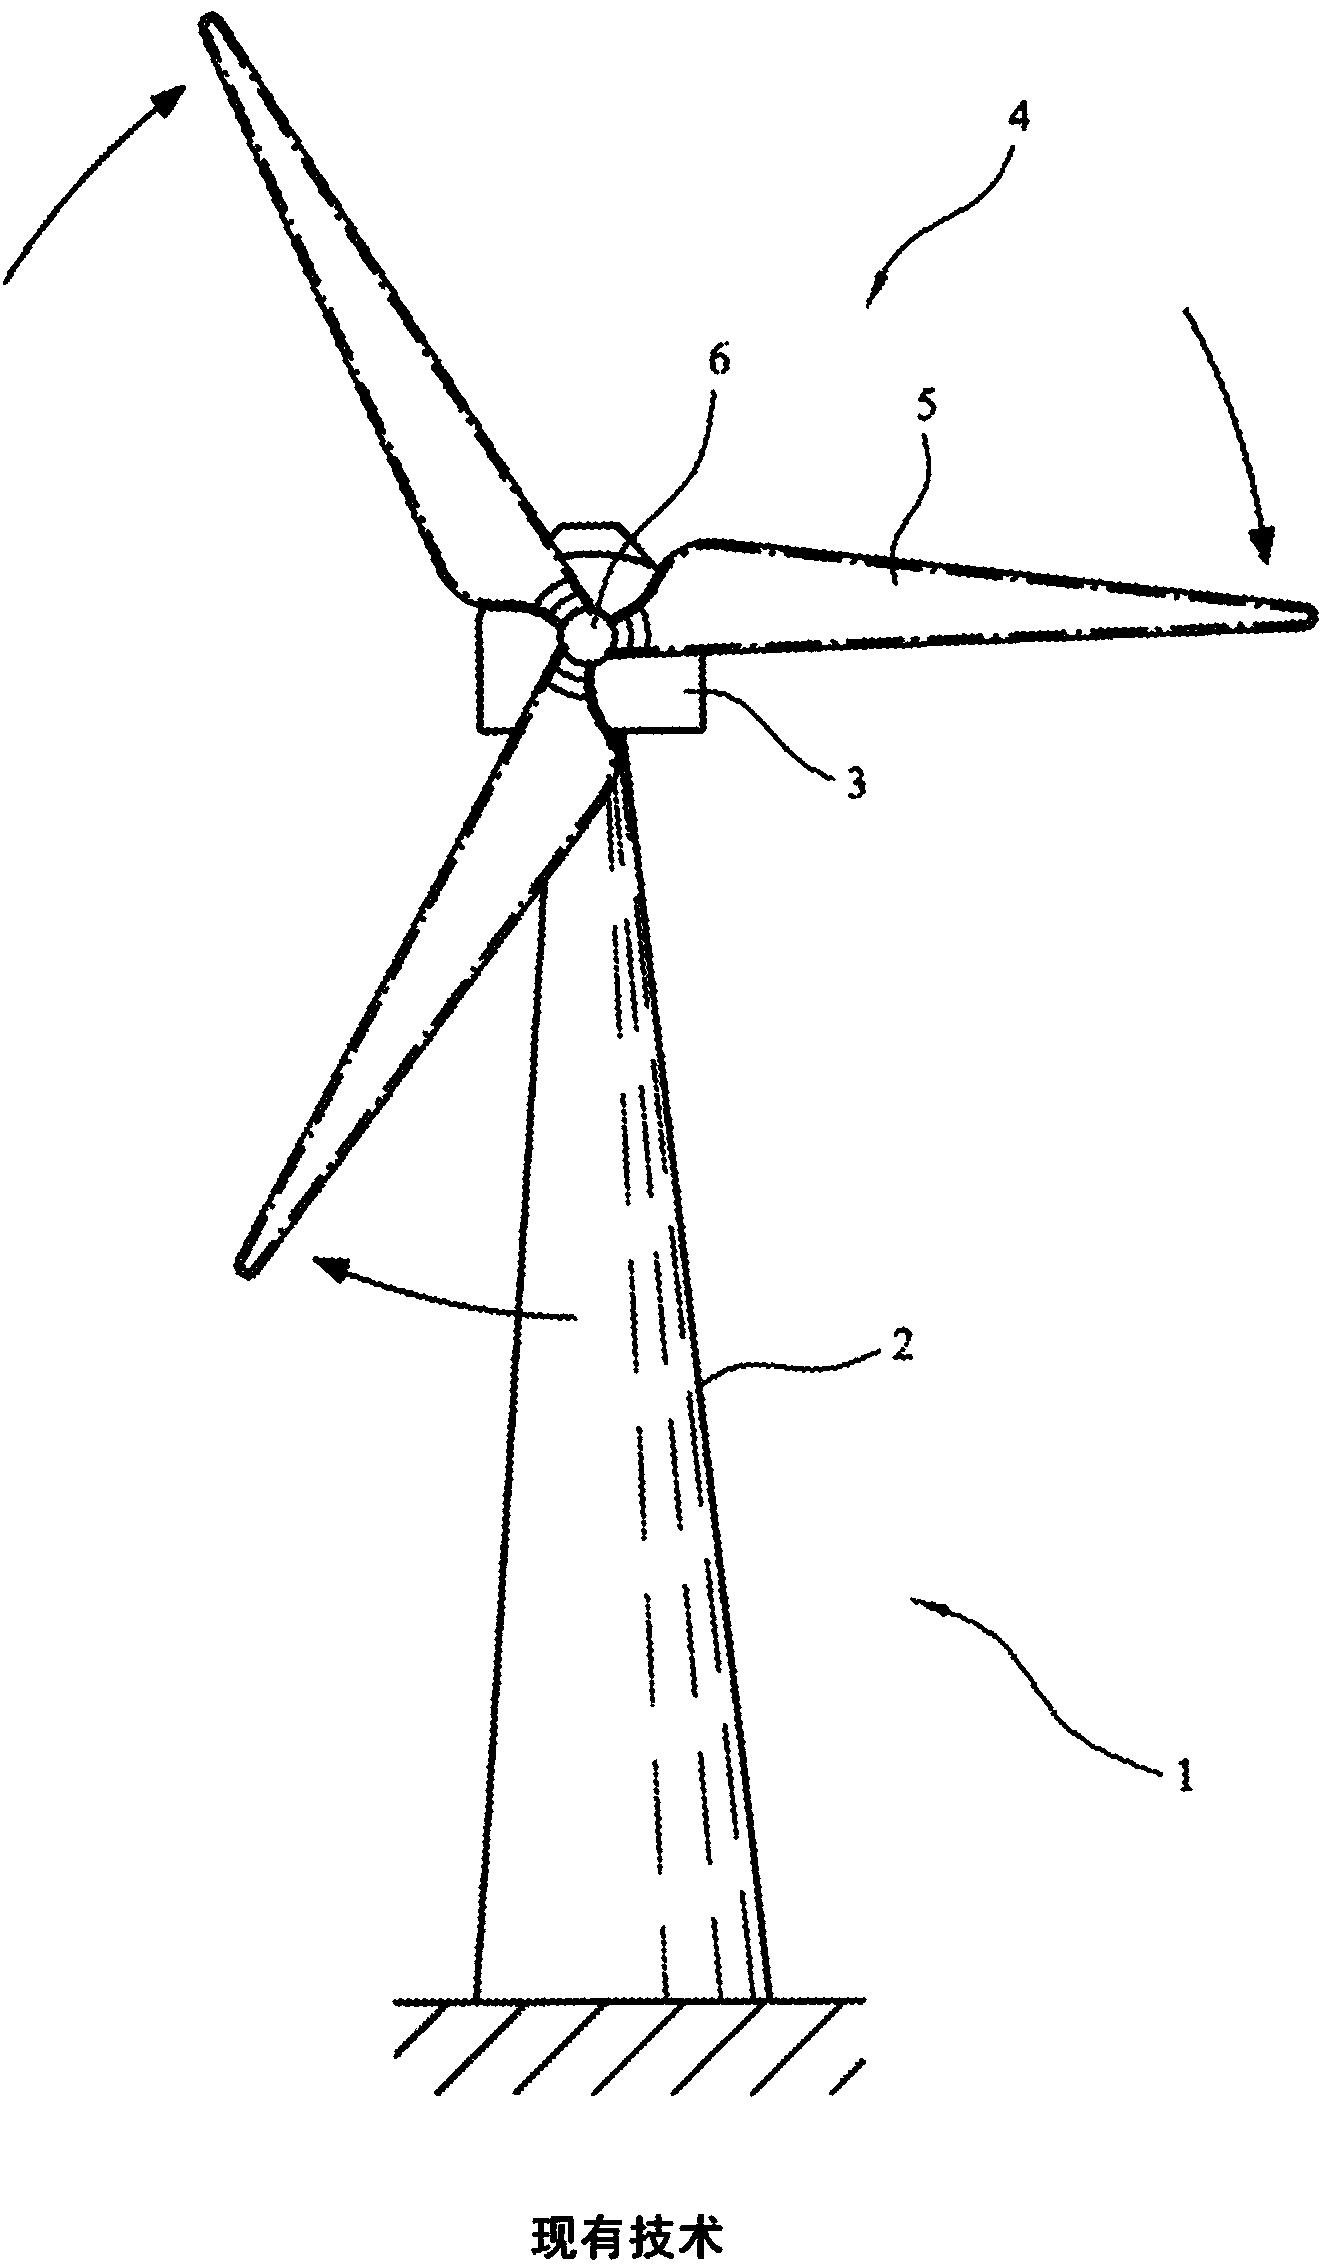 A wind turbine blade ice accretion detector